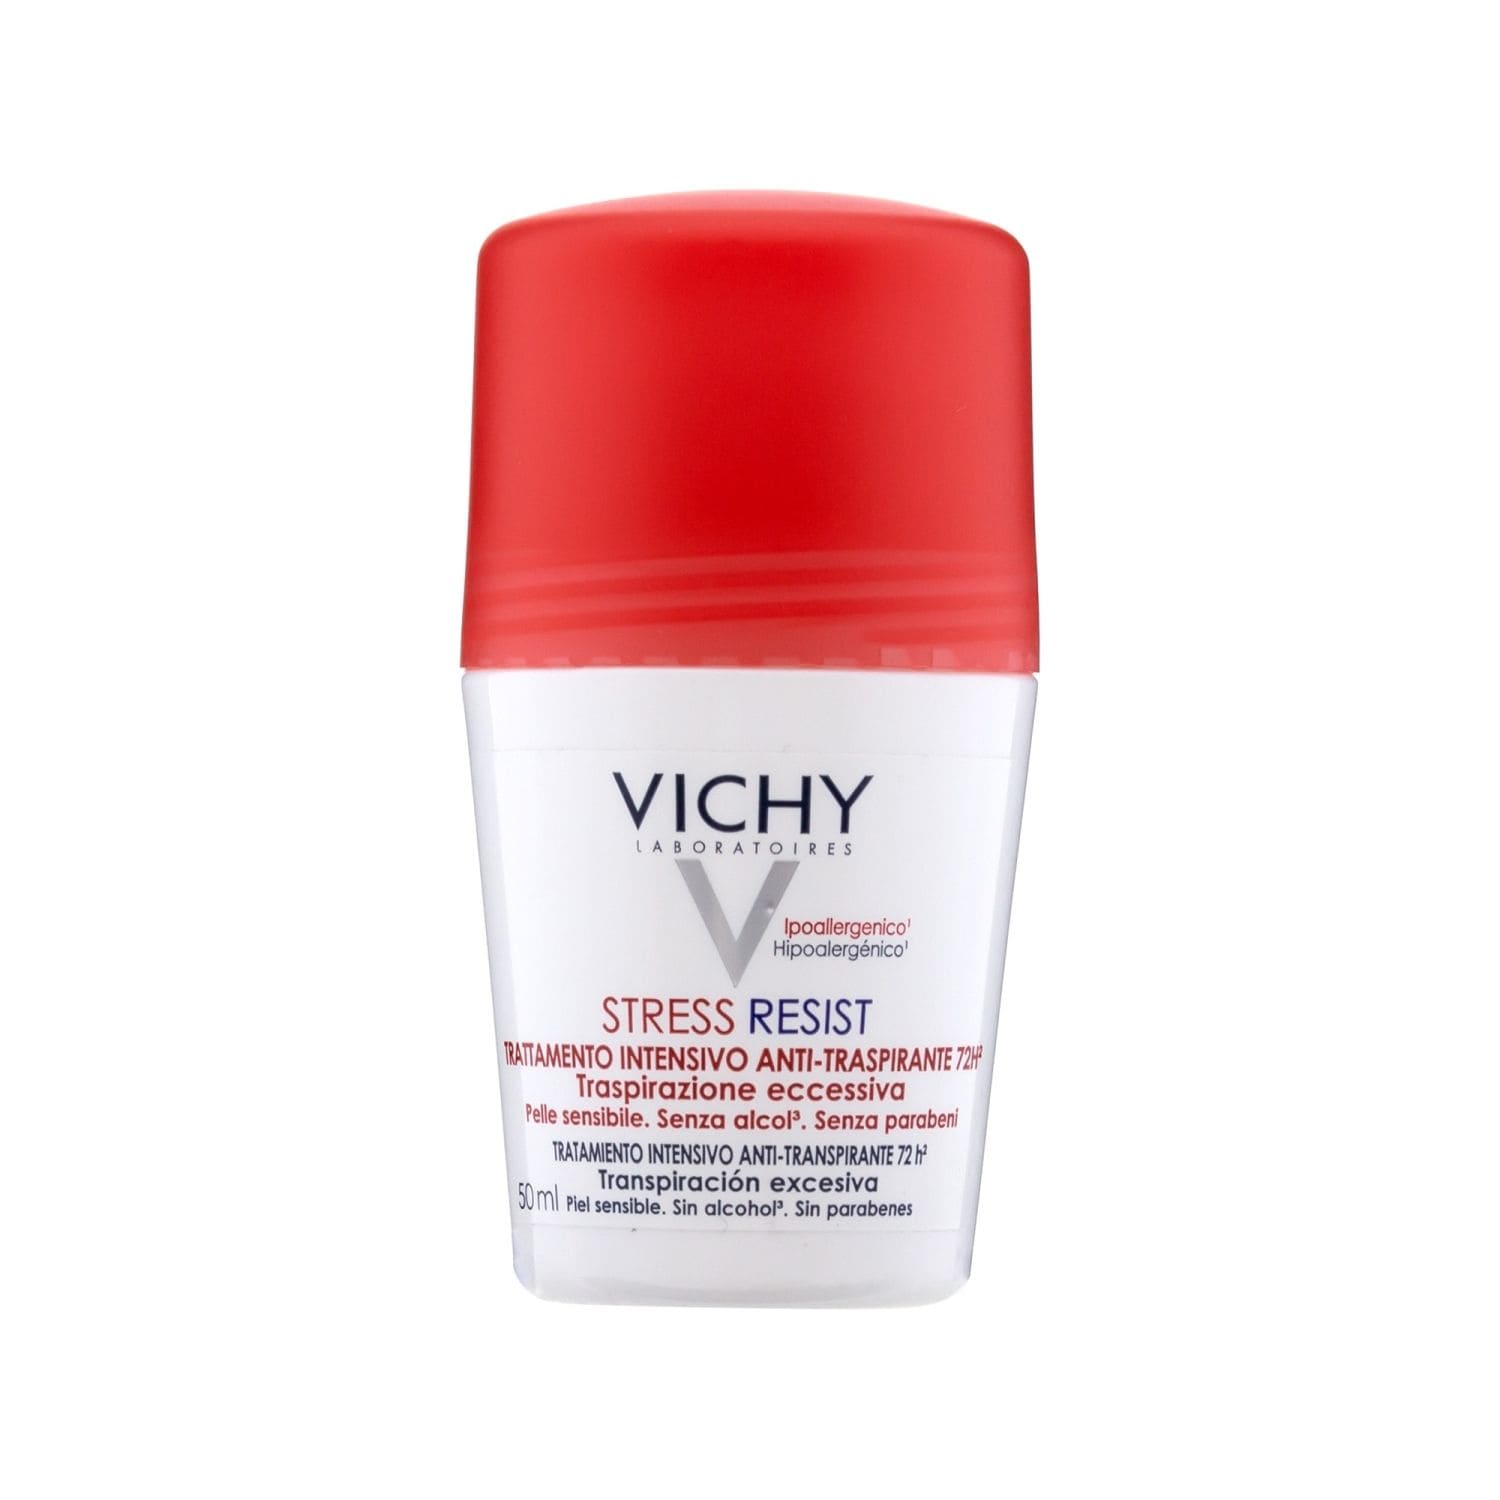 Vichy Stress Resist Tratamiento Intensivo Antitranspirante 72h